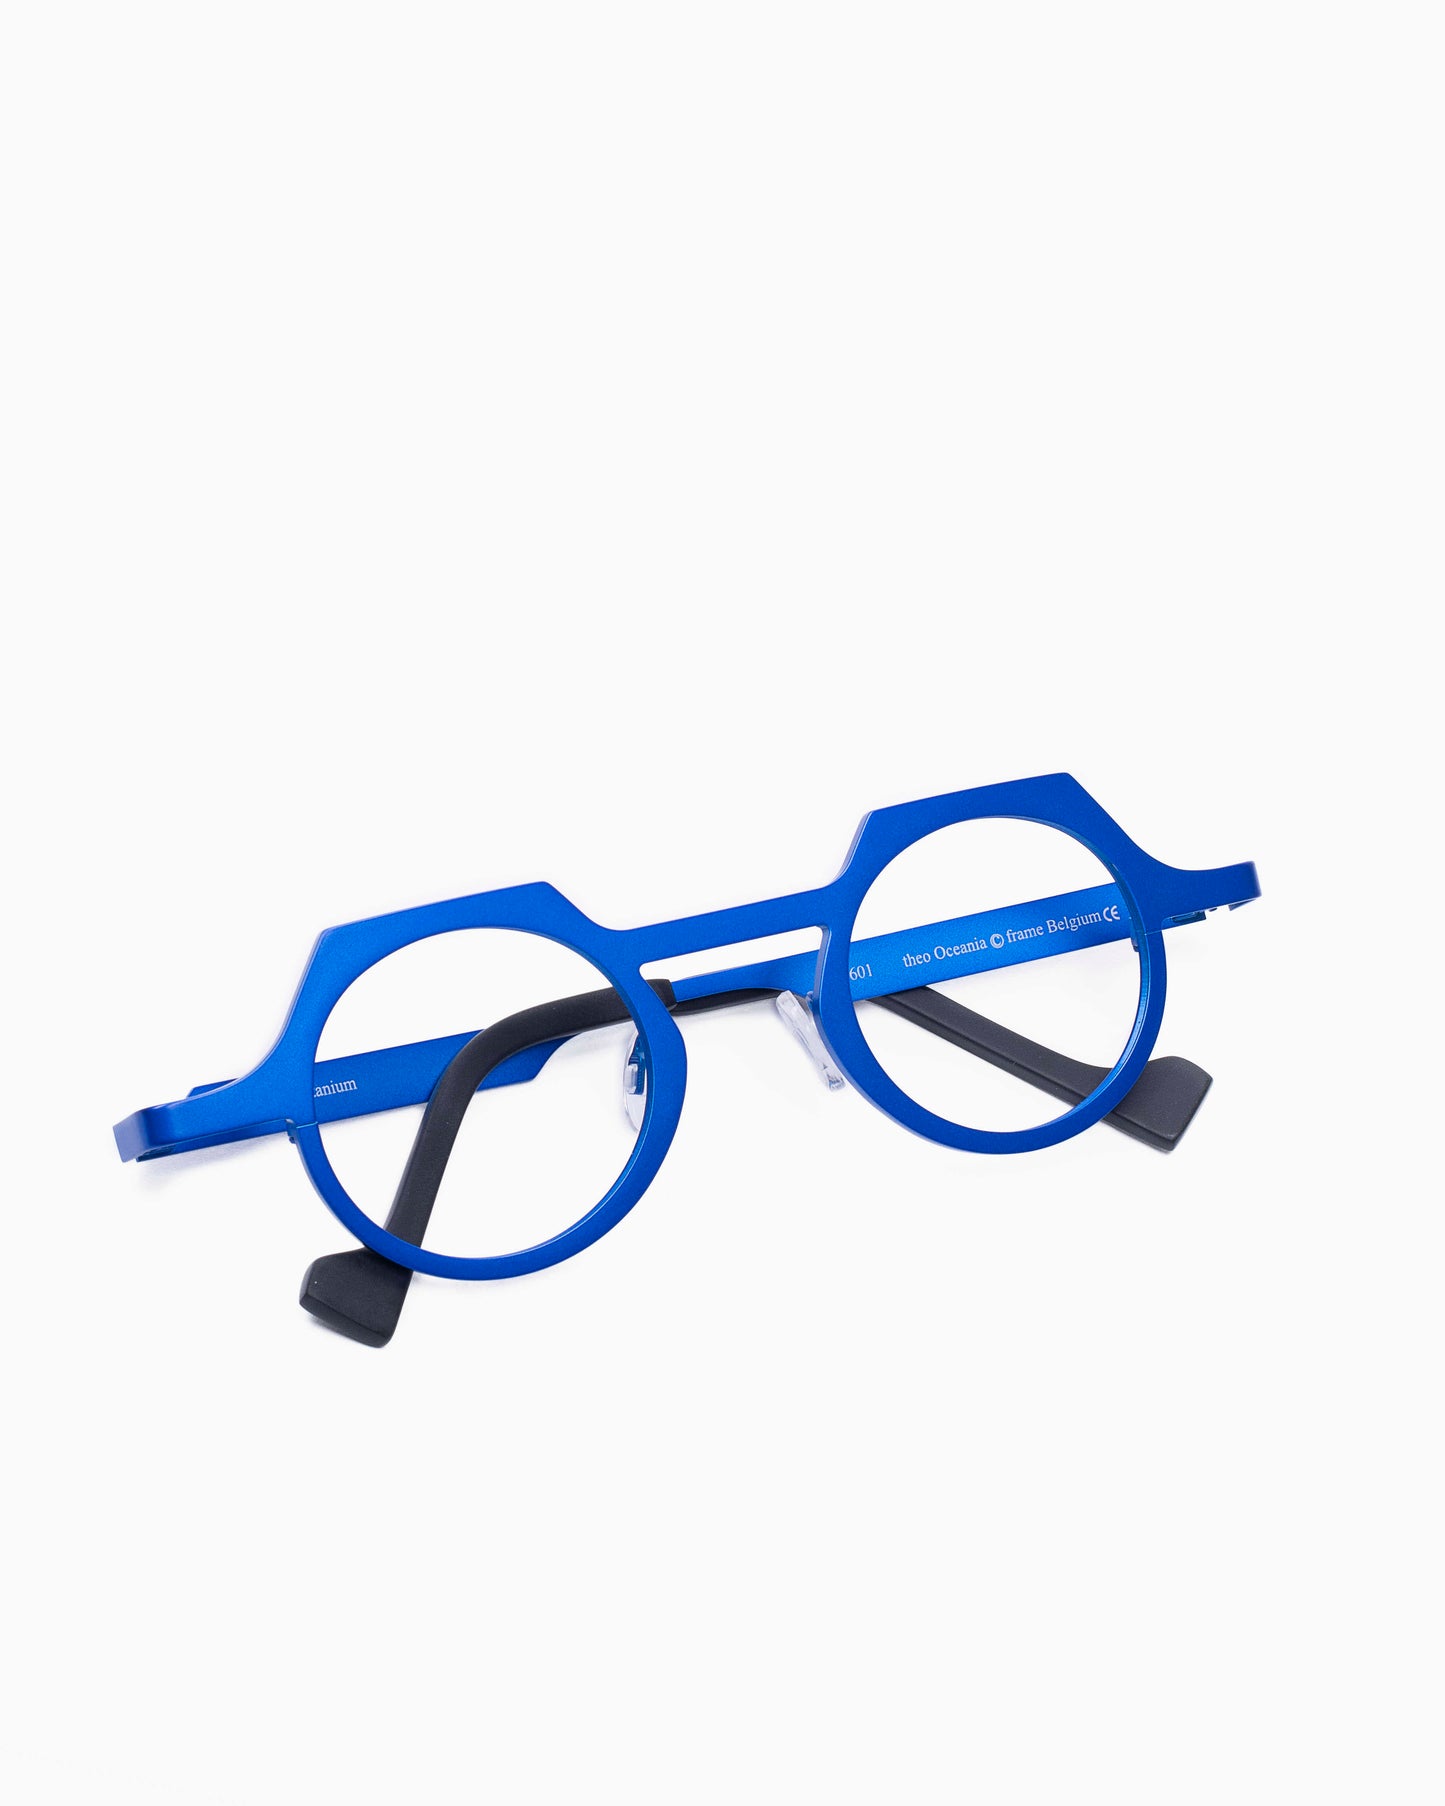 Theo - Oceania - 601 | glasses bar